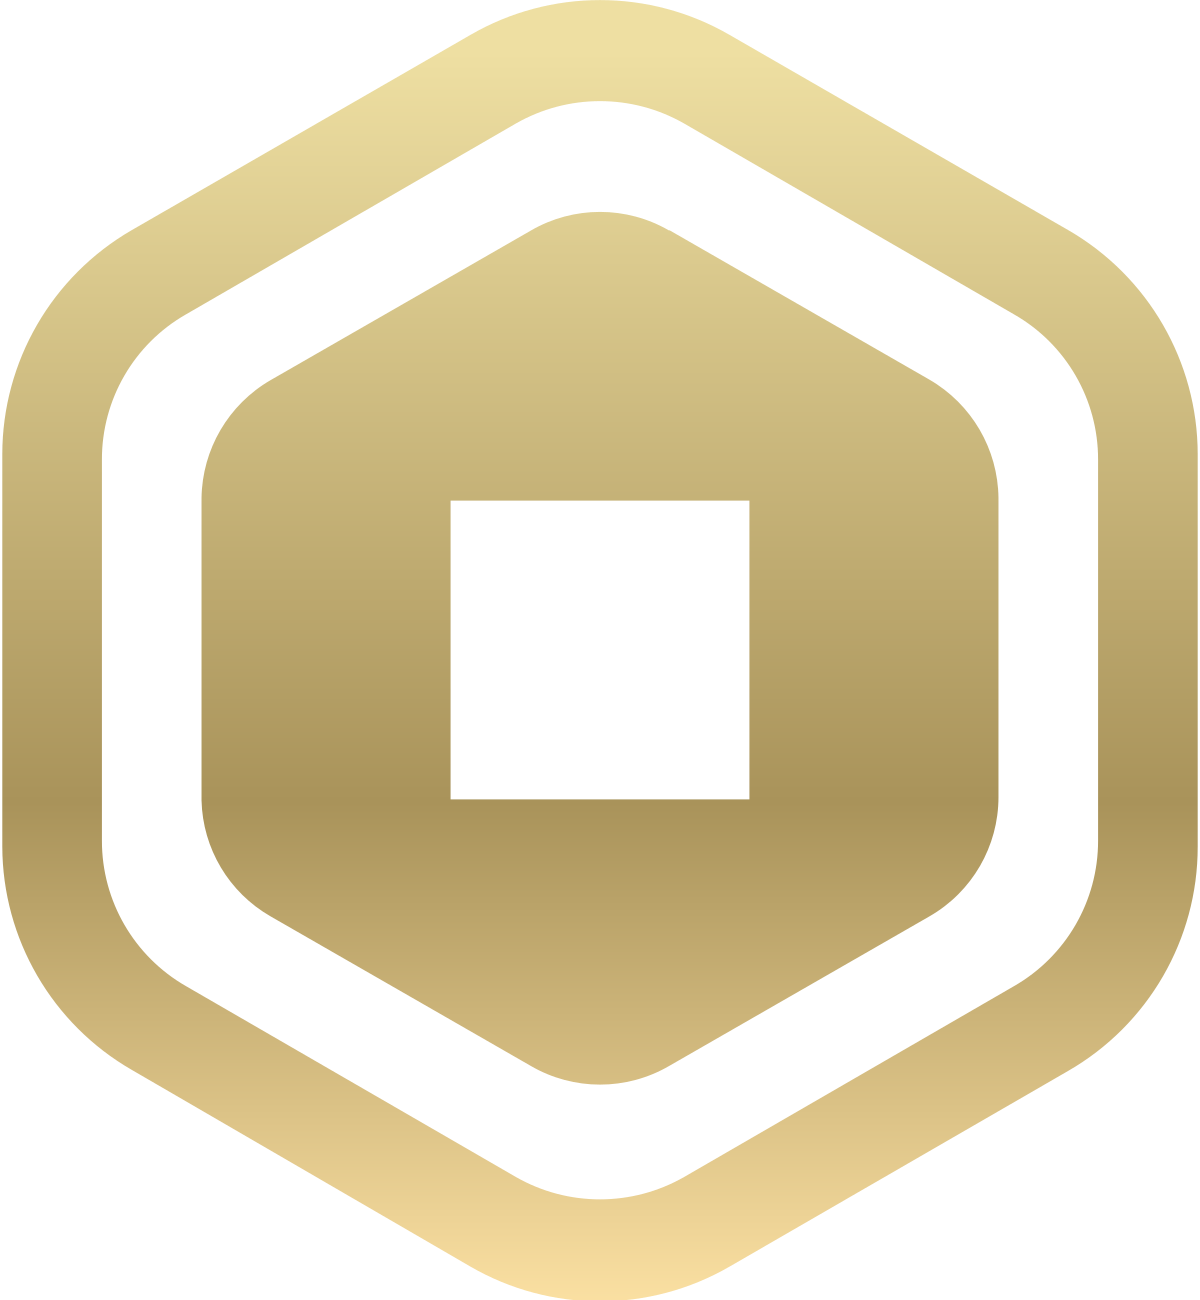 File:Robux 2019 Logo gold.svg - Wikipedia